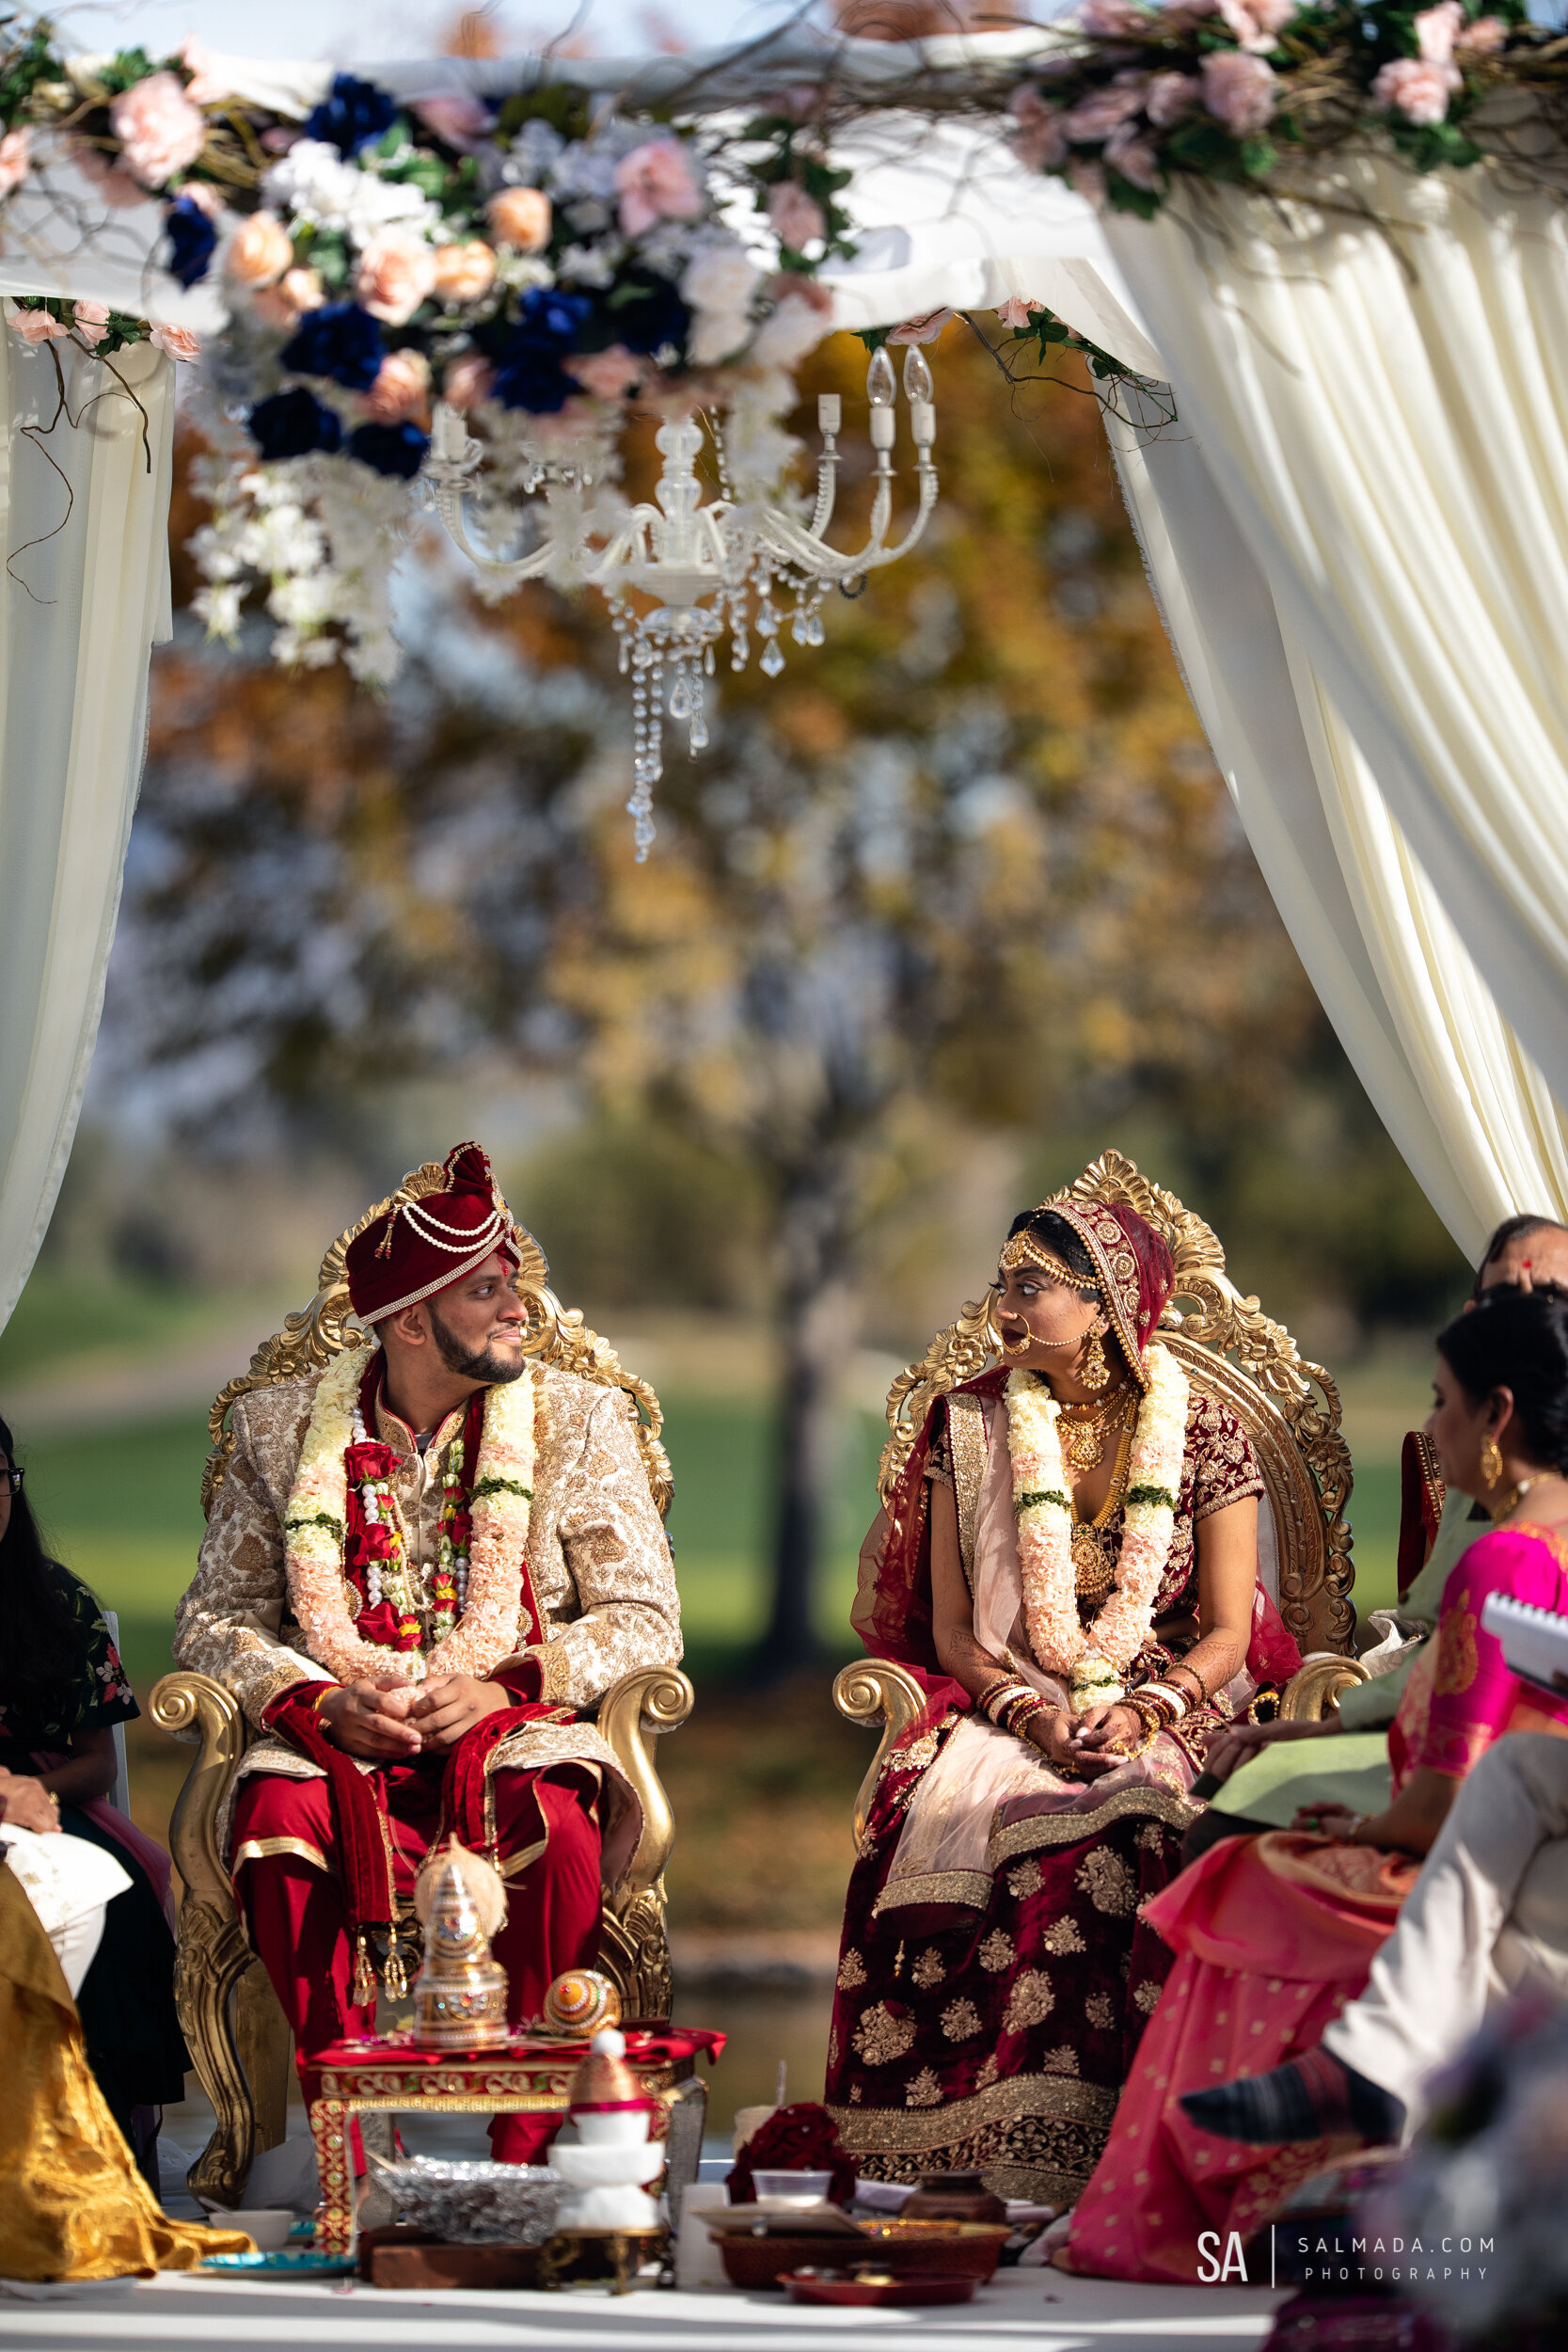 how long does a hindu wedding ceremony last